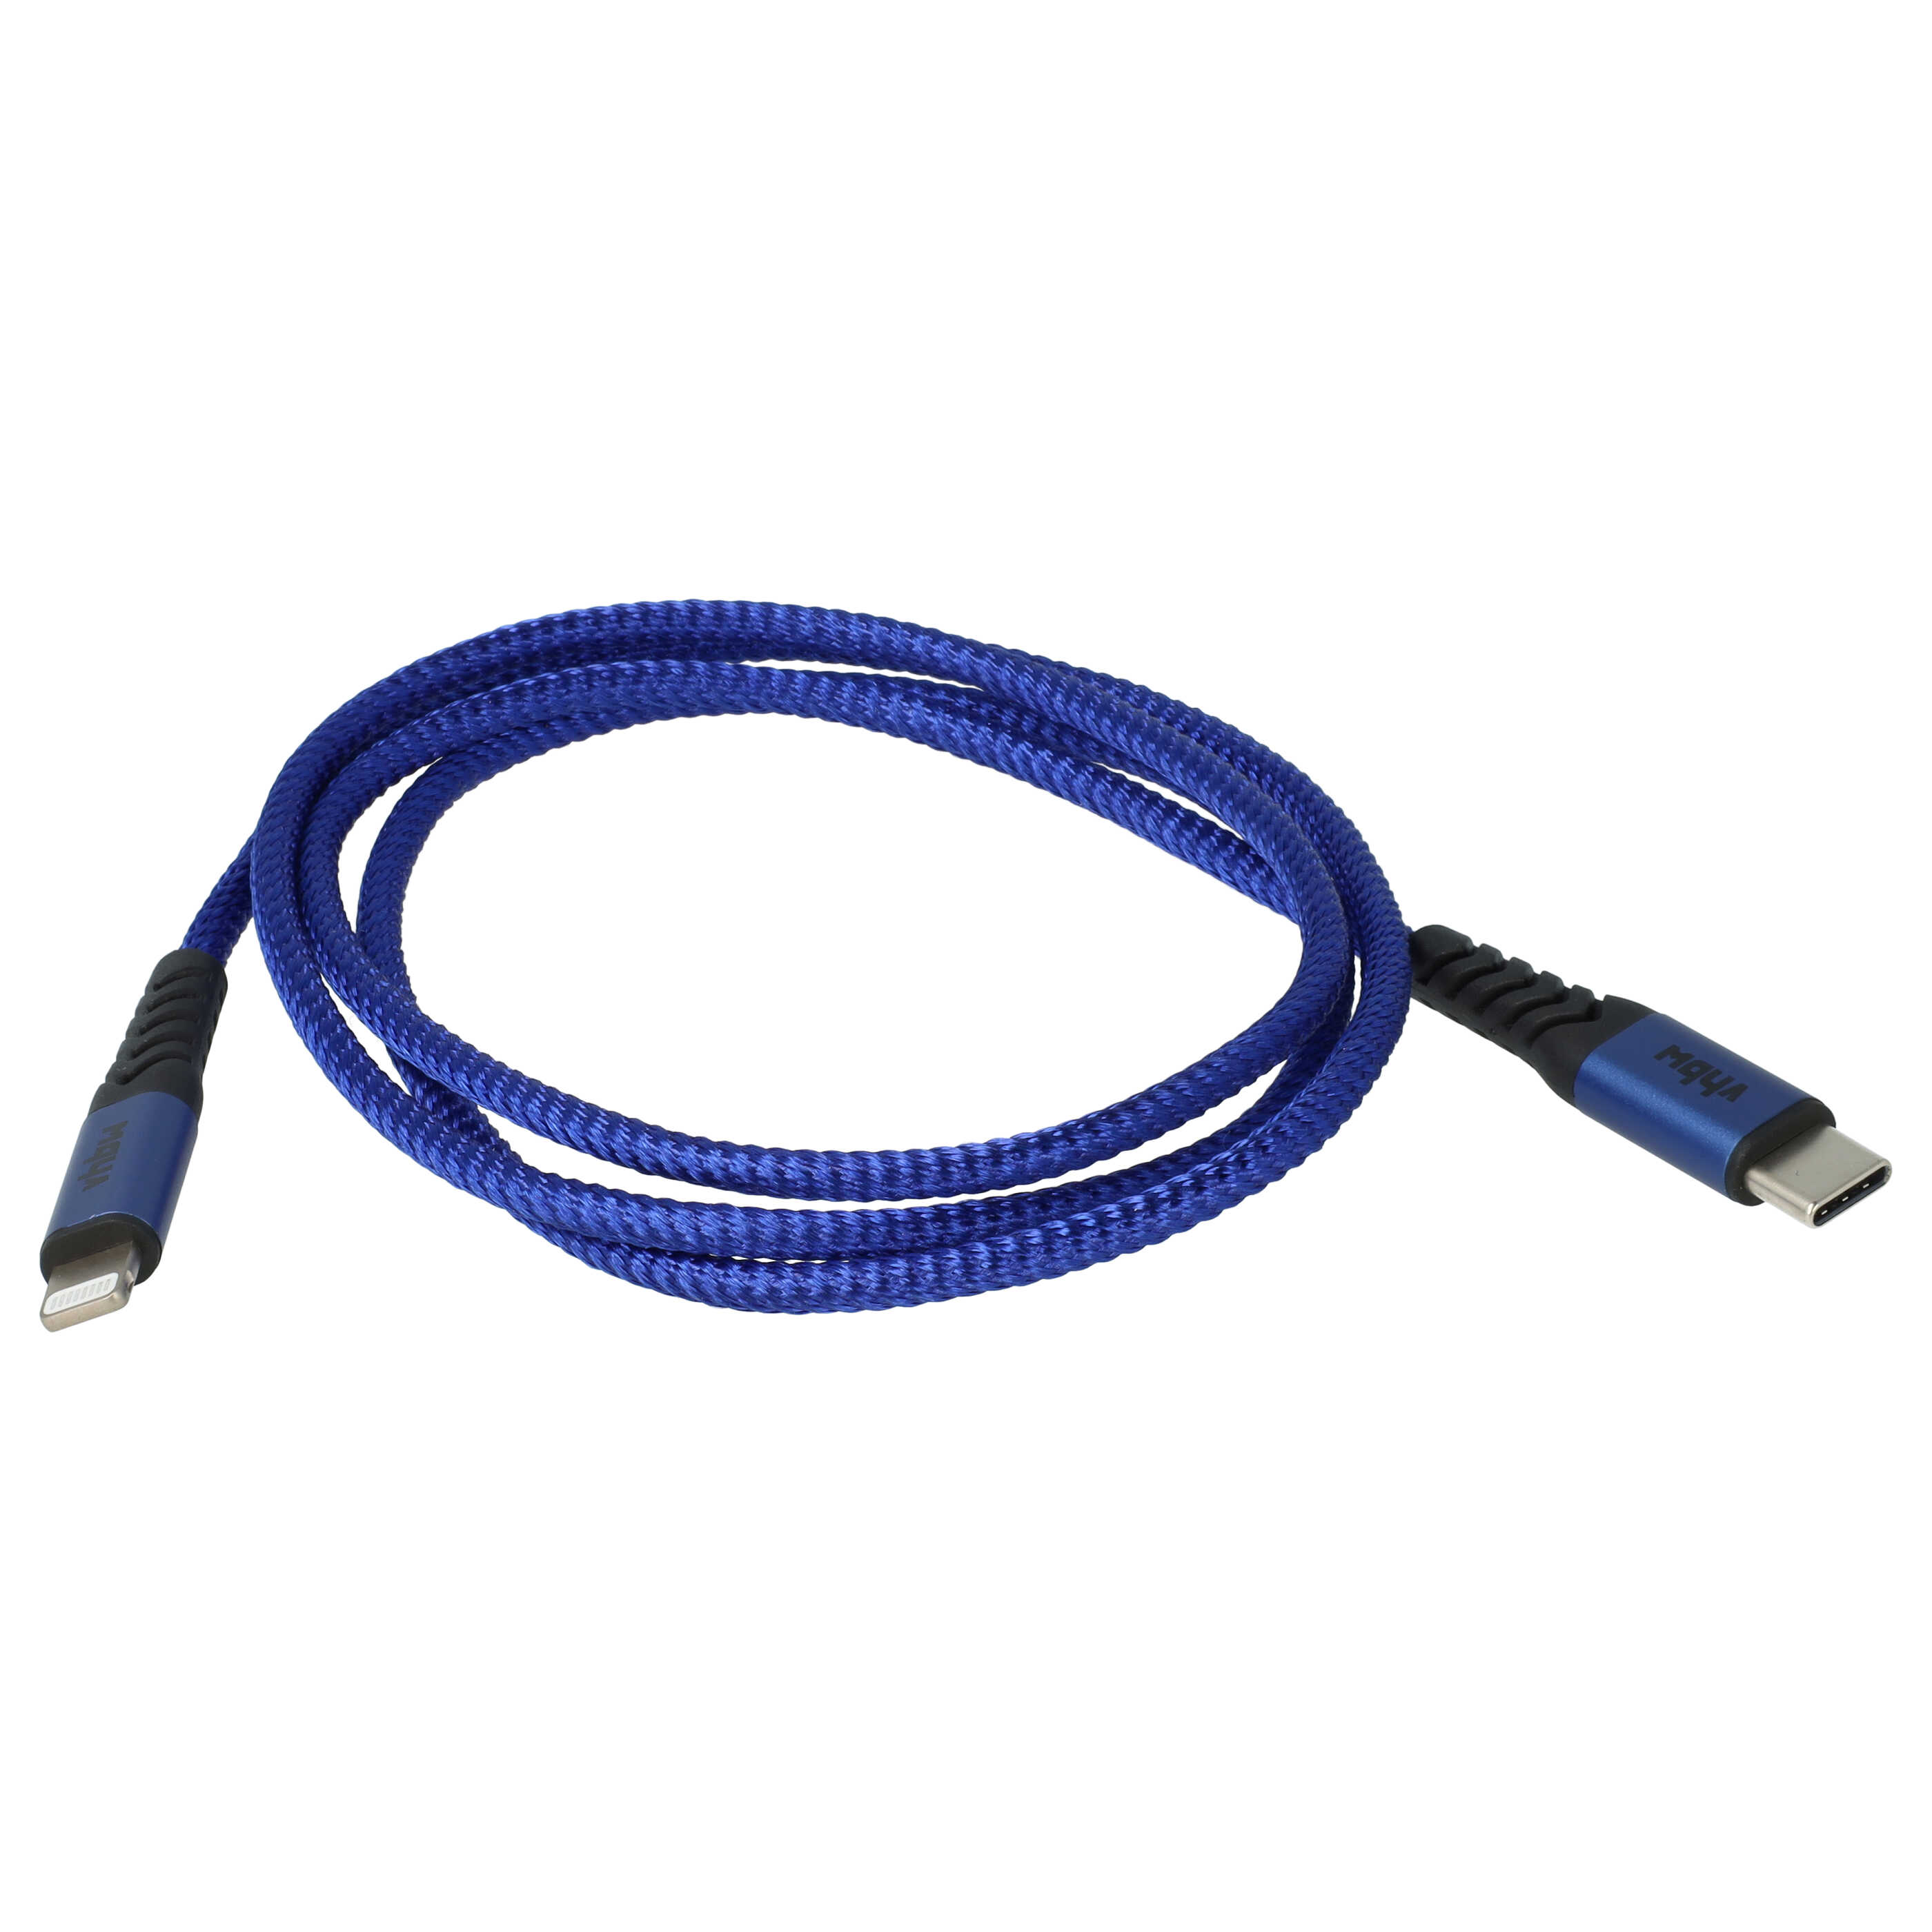 Cable lightning a USB C, Thunderbolt 3 para dispositivos Apple iOS Apple MacBook - negro / azul, 100 cm